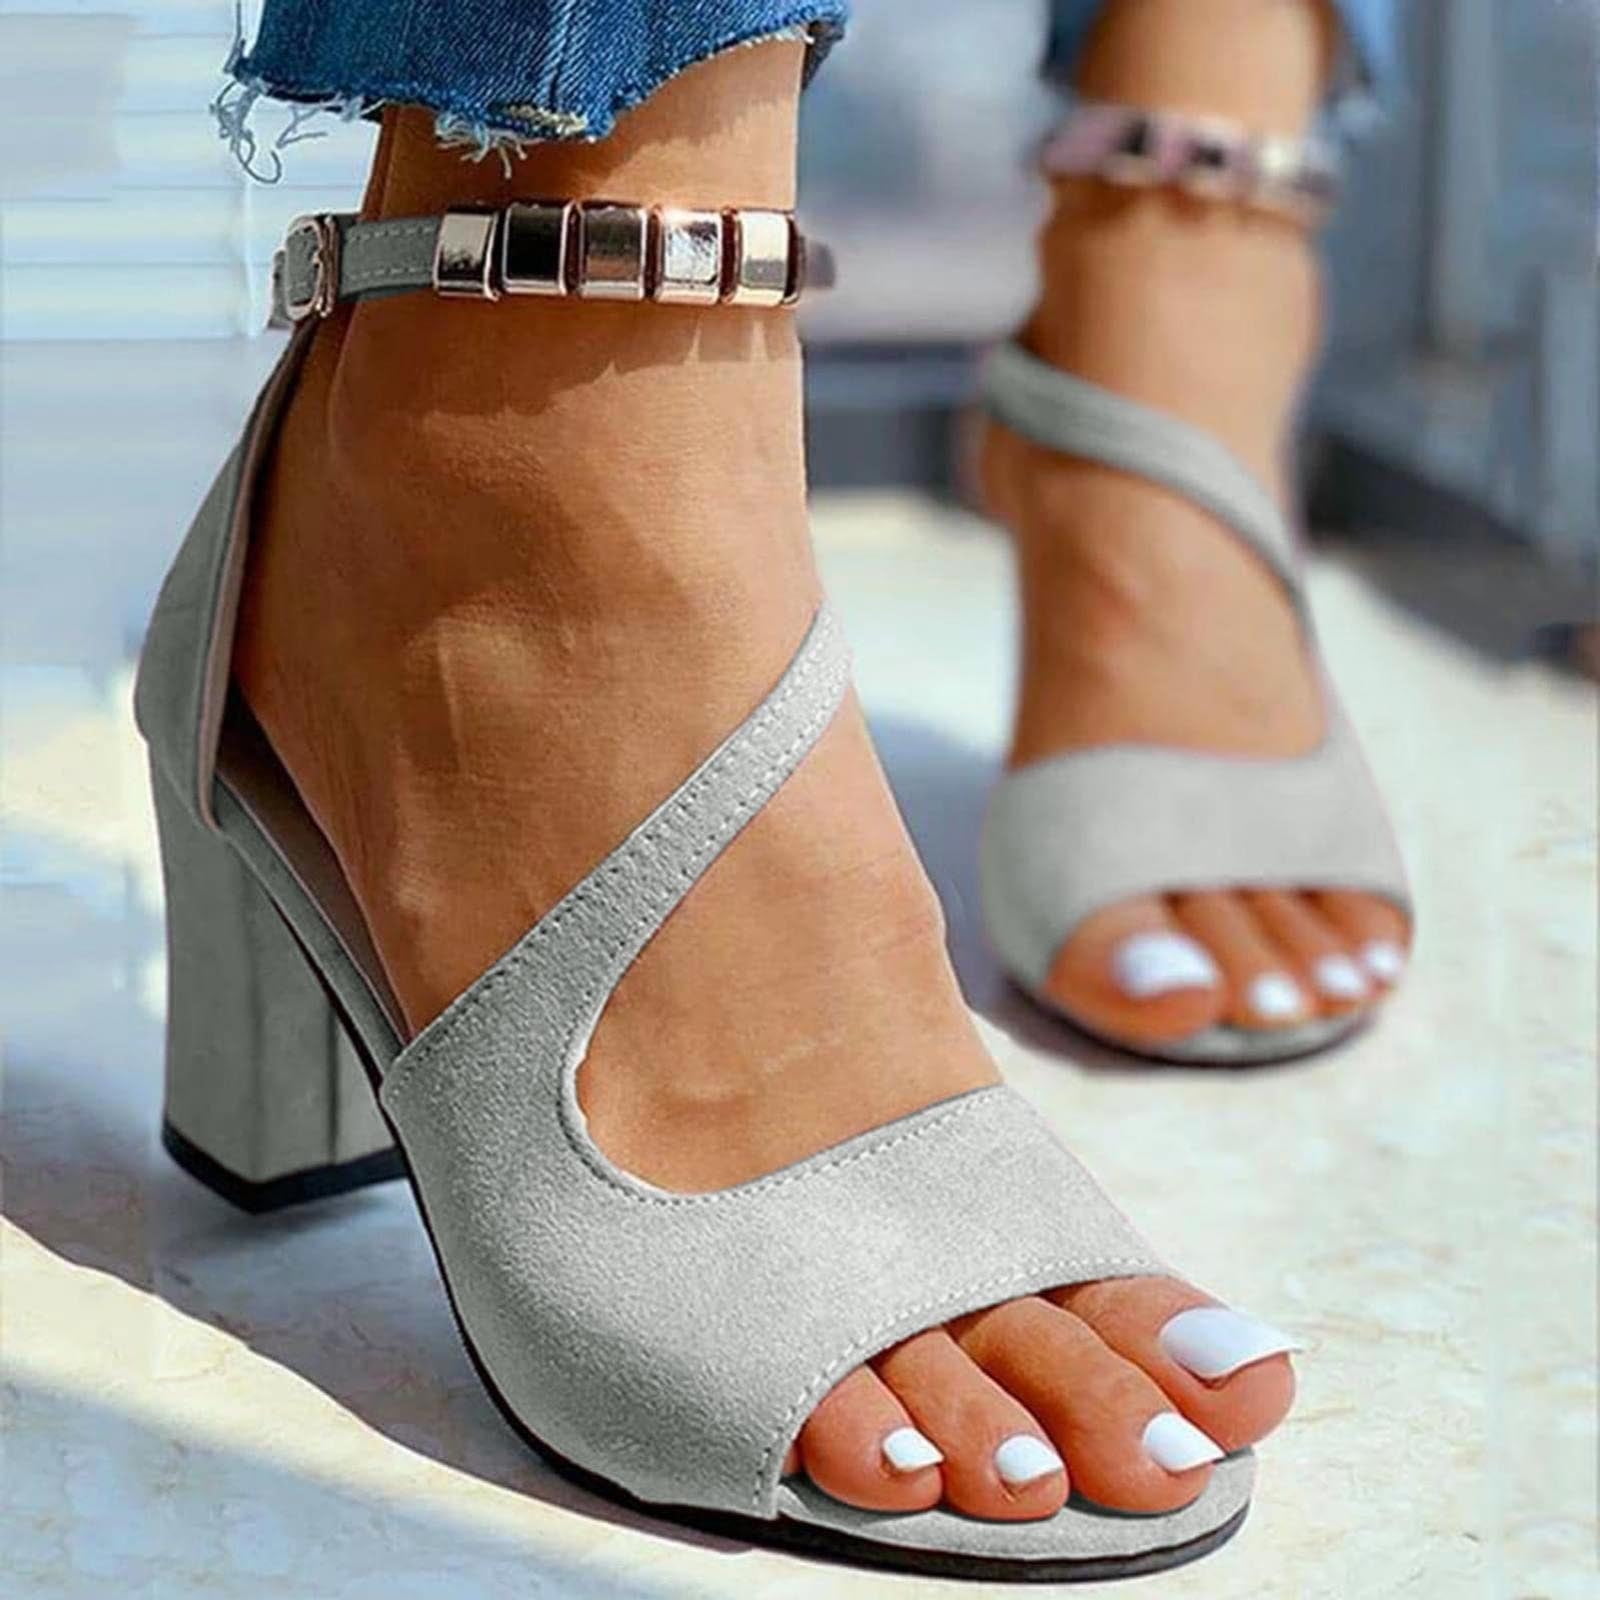 SBYOJLPB Women's Shoes Metal Chain Diamond Shiny Block High Heel Pumps  Ankle Strap Casual Square Toe Sandals Black 8.5(41) - Walmart.com